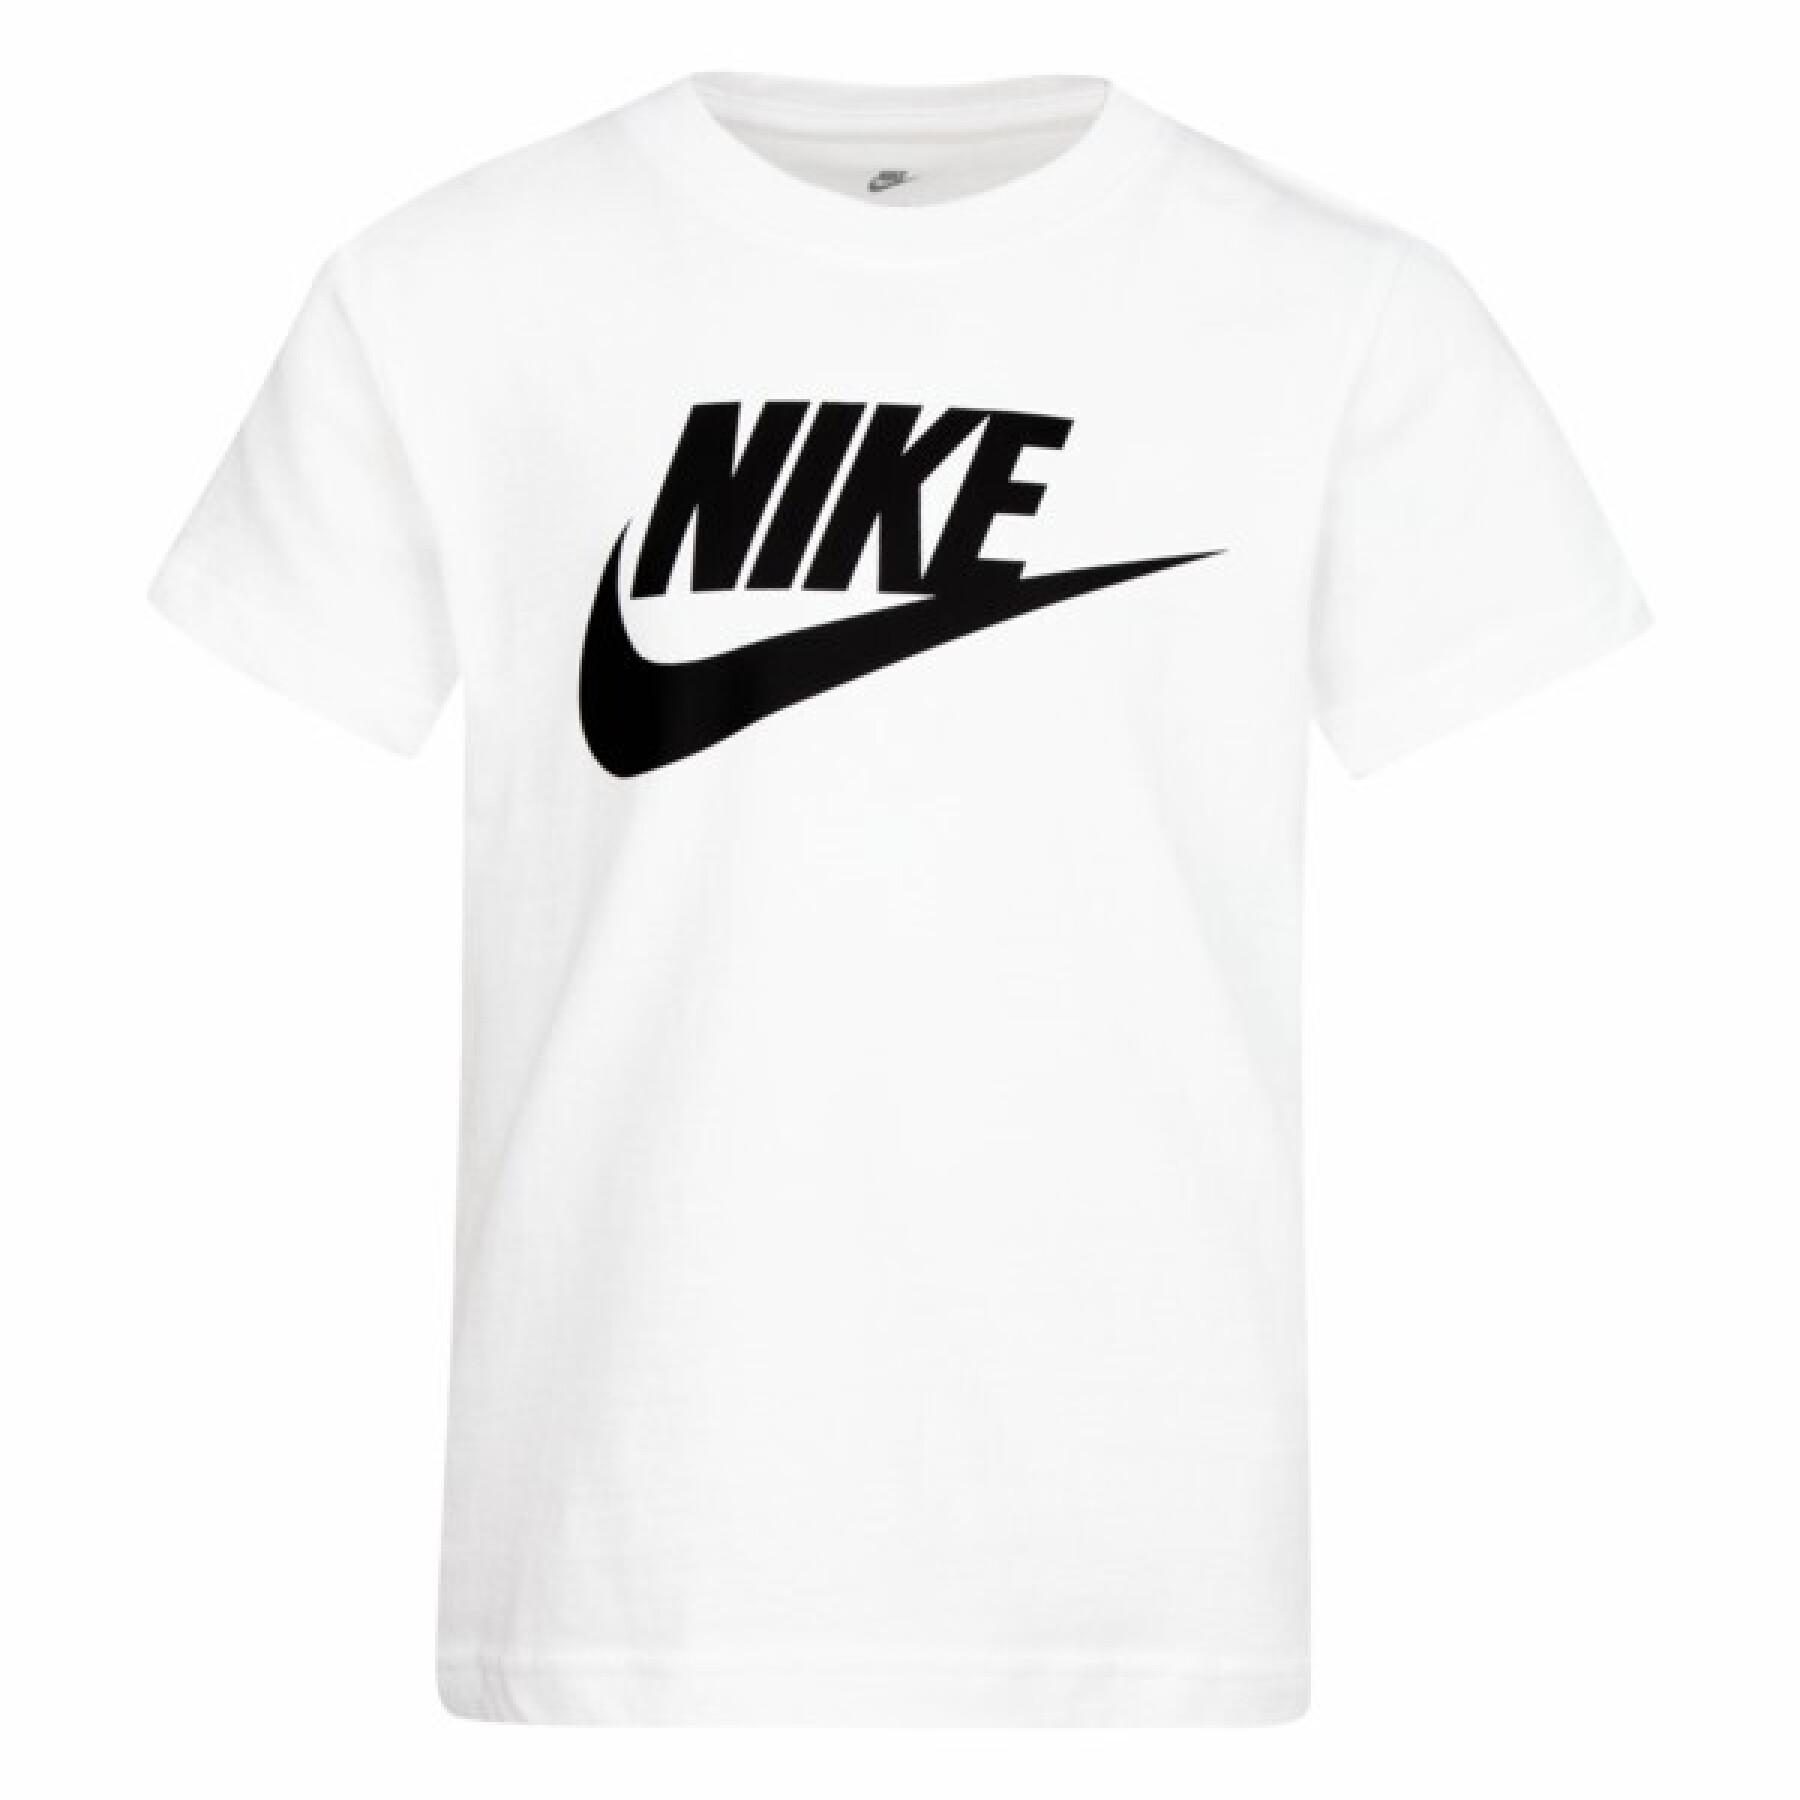 T-shirt bébé garçon Nike Futura